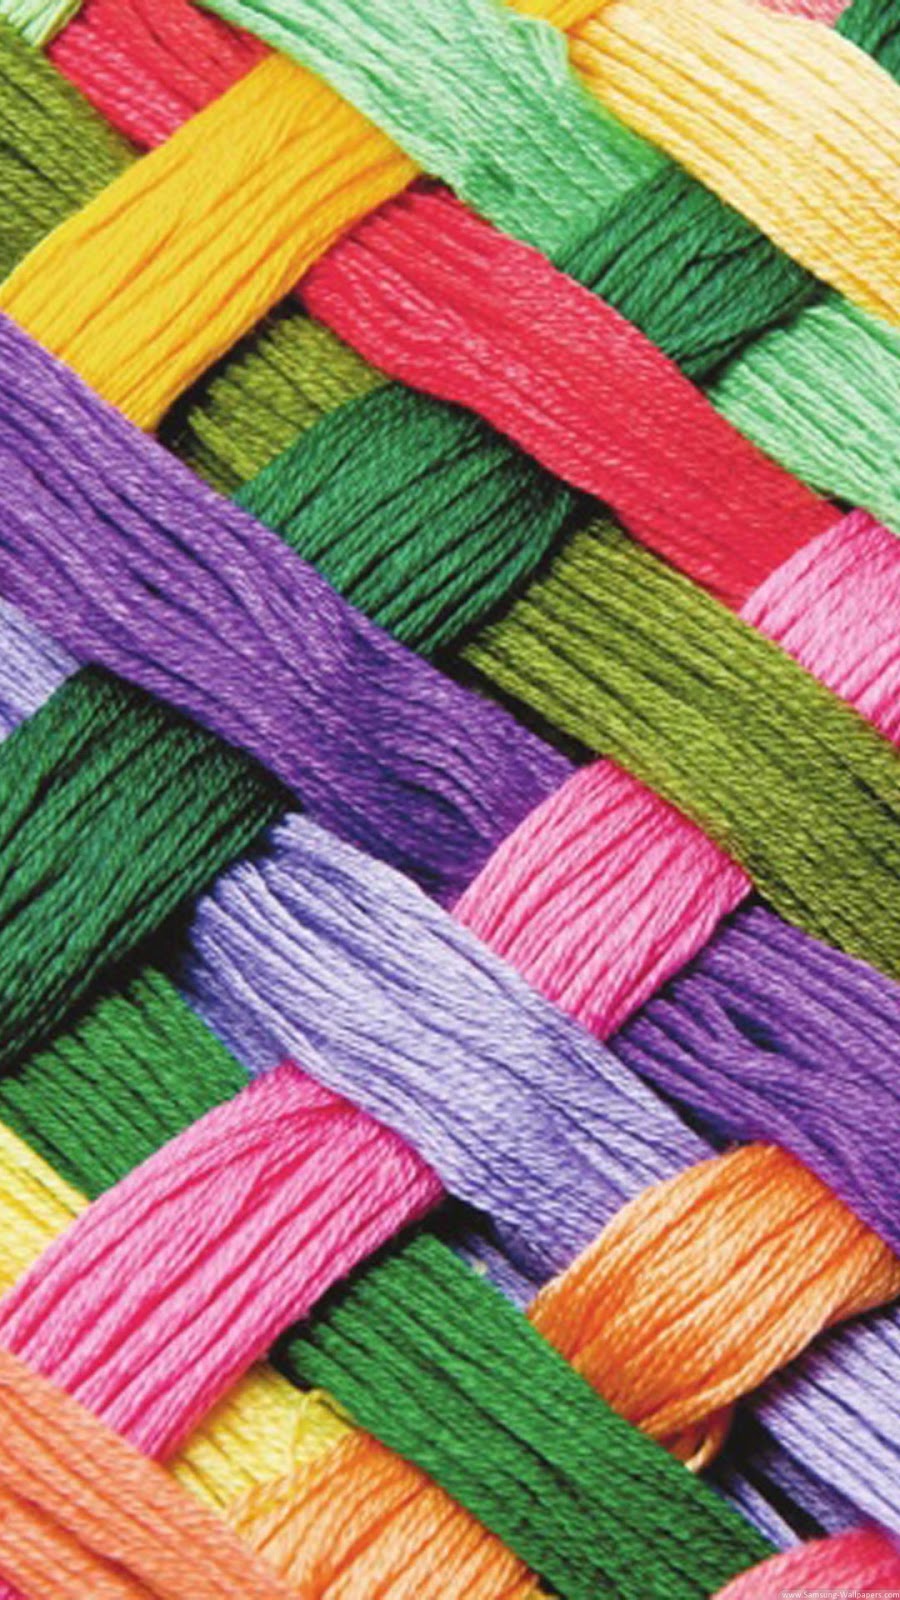 foto fondo de pantalla de untuk,de lana,lana,hilo,textil,tejido de punto